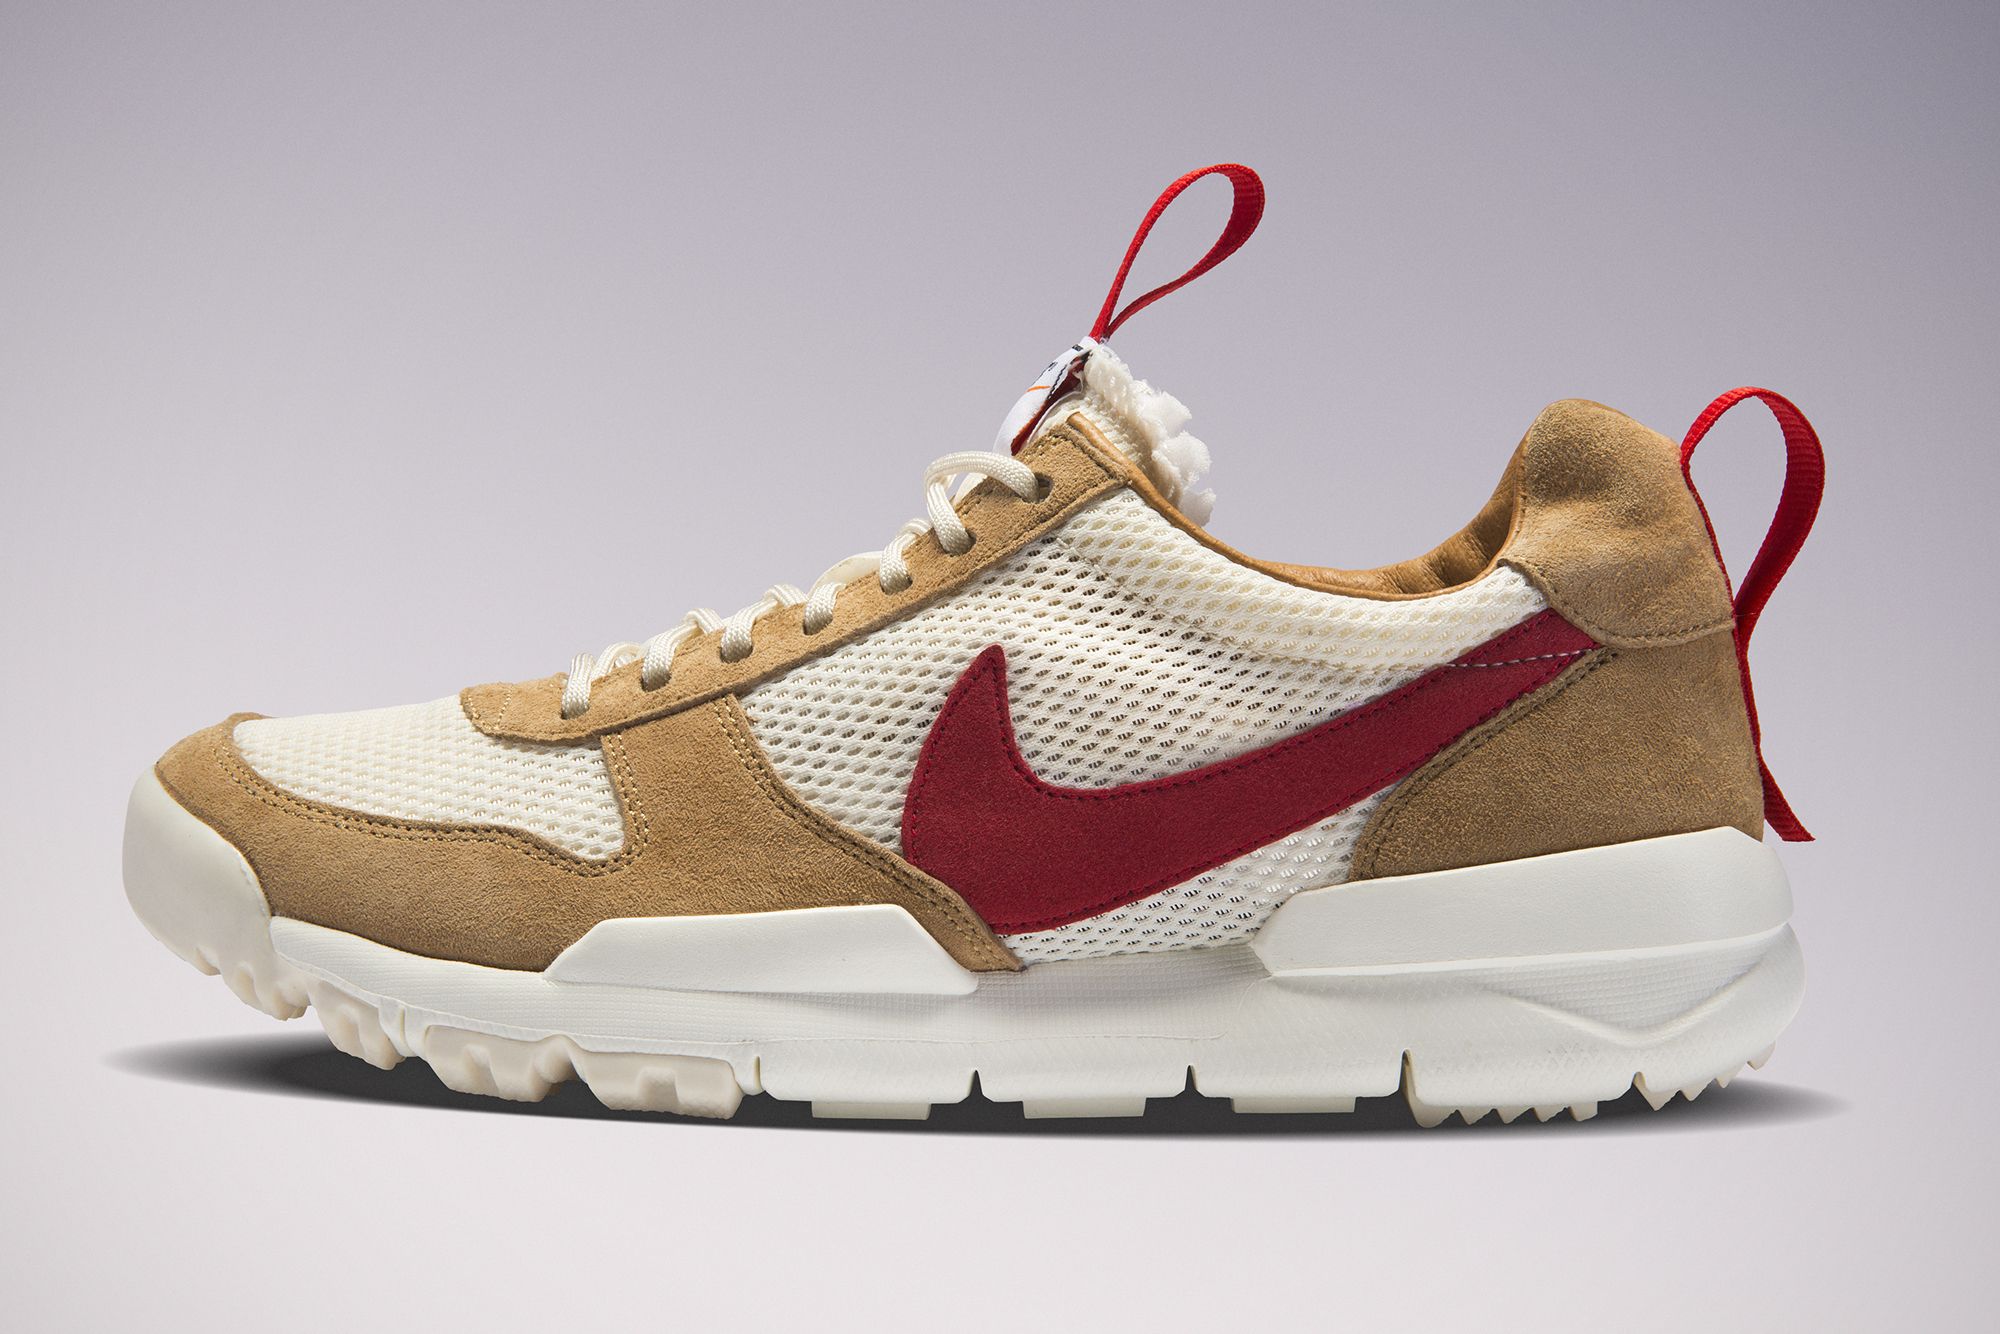 Tom Sachs x Nike Mars Yard 2.0